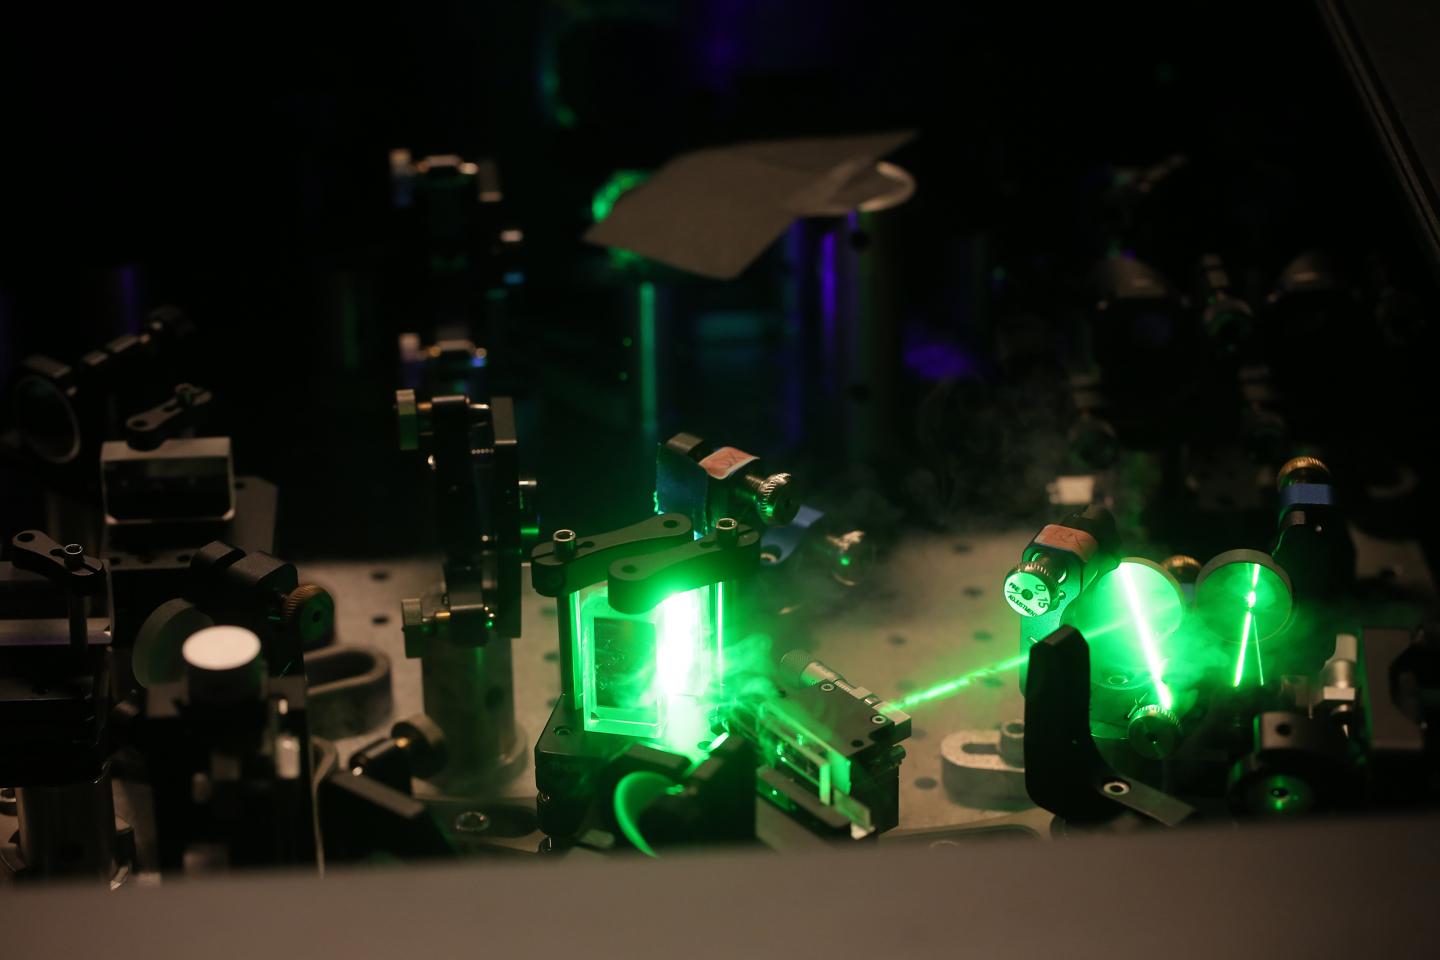 A nanoscale laser made of gold and zinc oxide